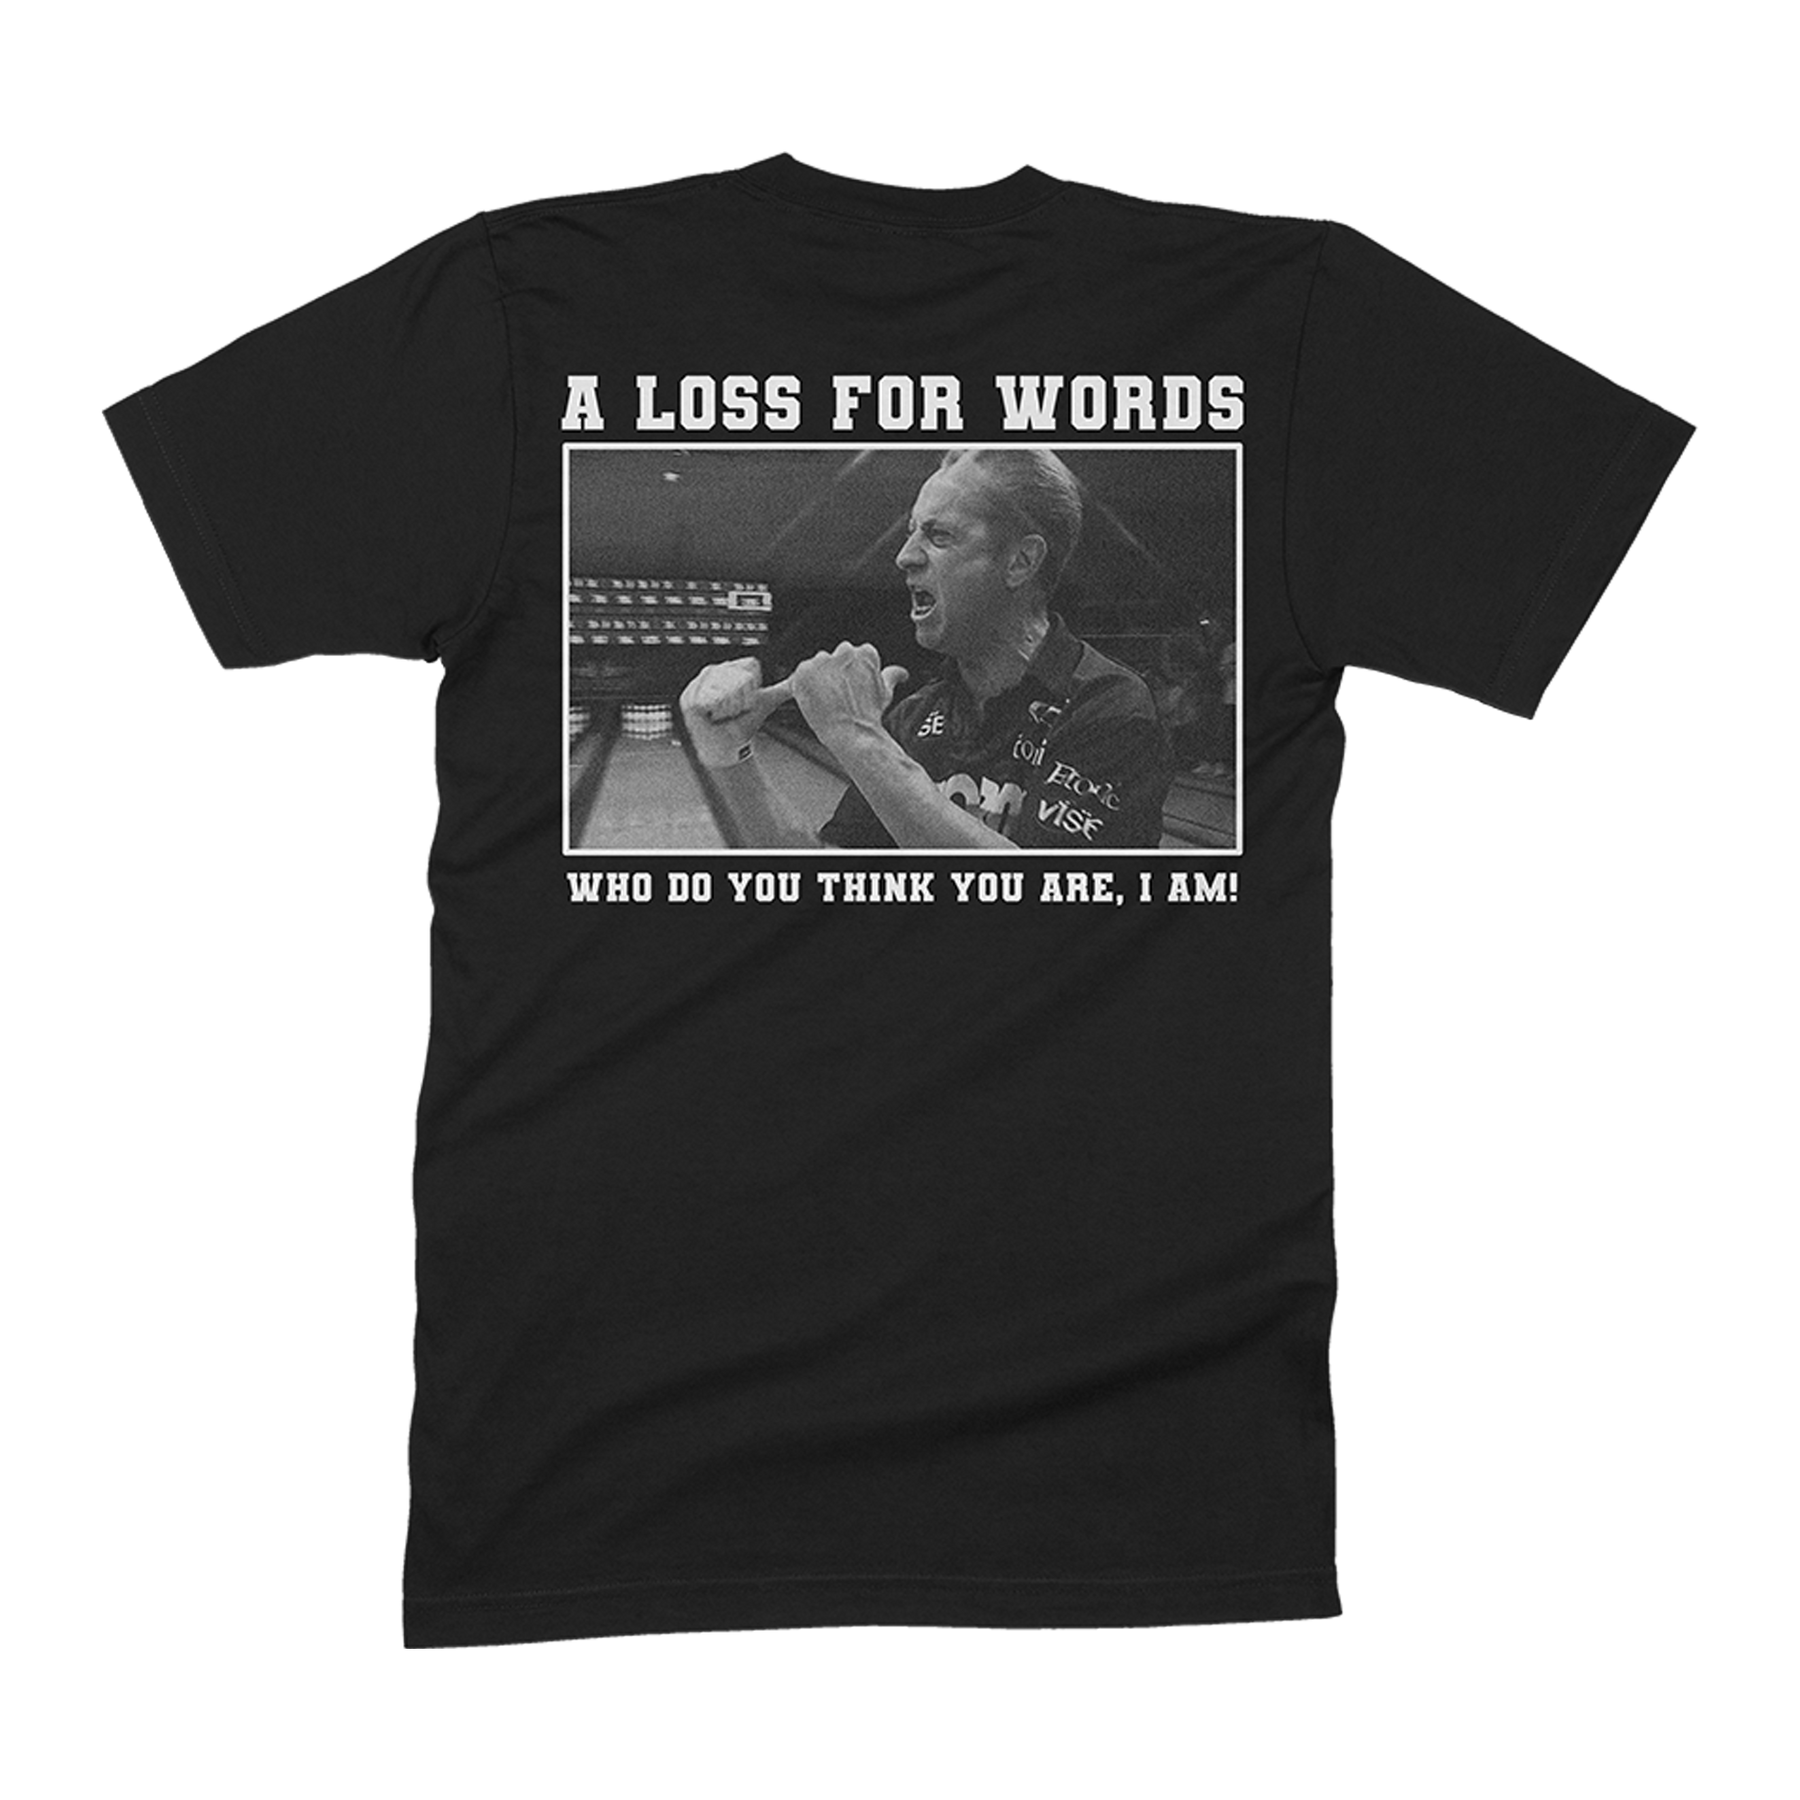 A Loss for Words - Pete Weber Shirt